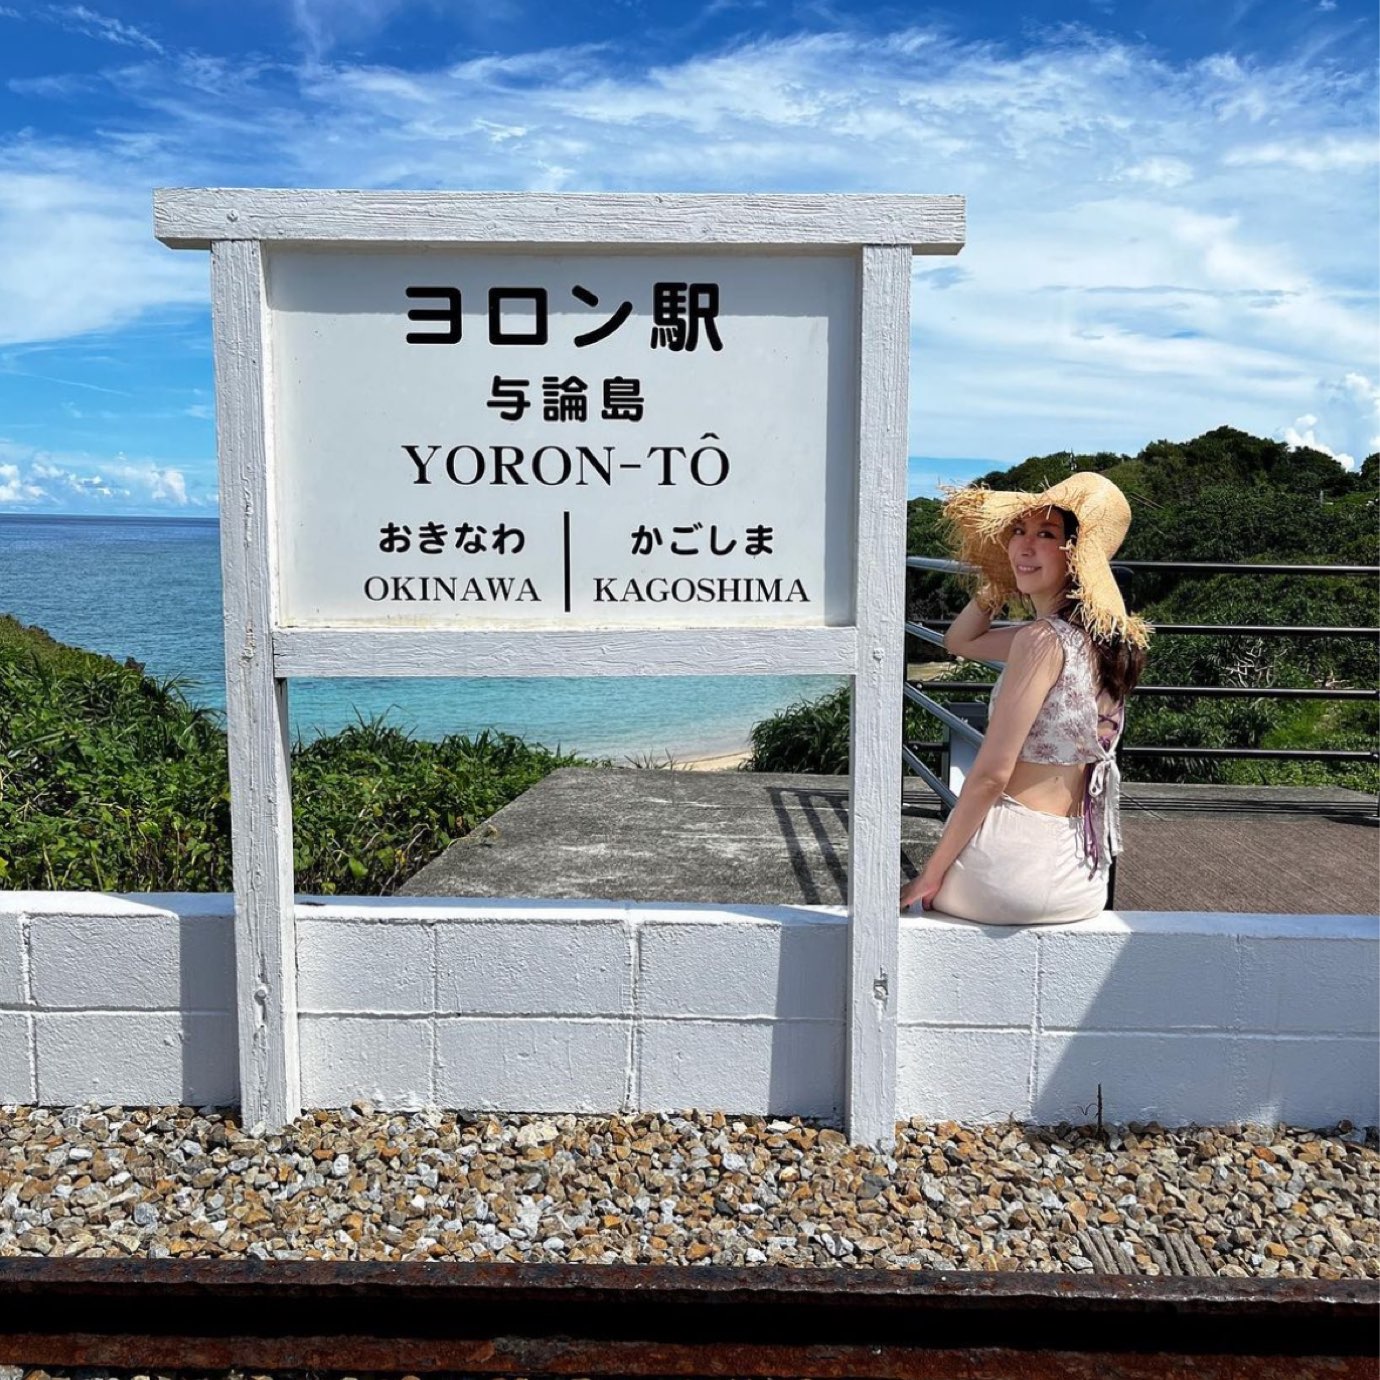 📍 Yoron Station / Yoron Island /鹿儿岛